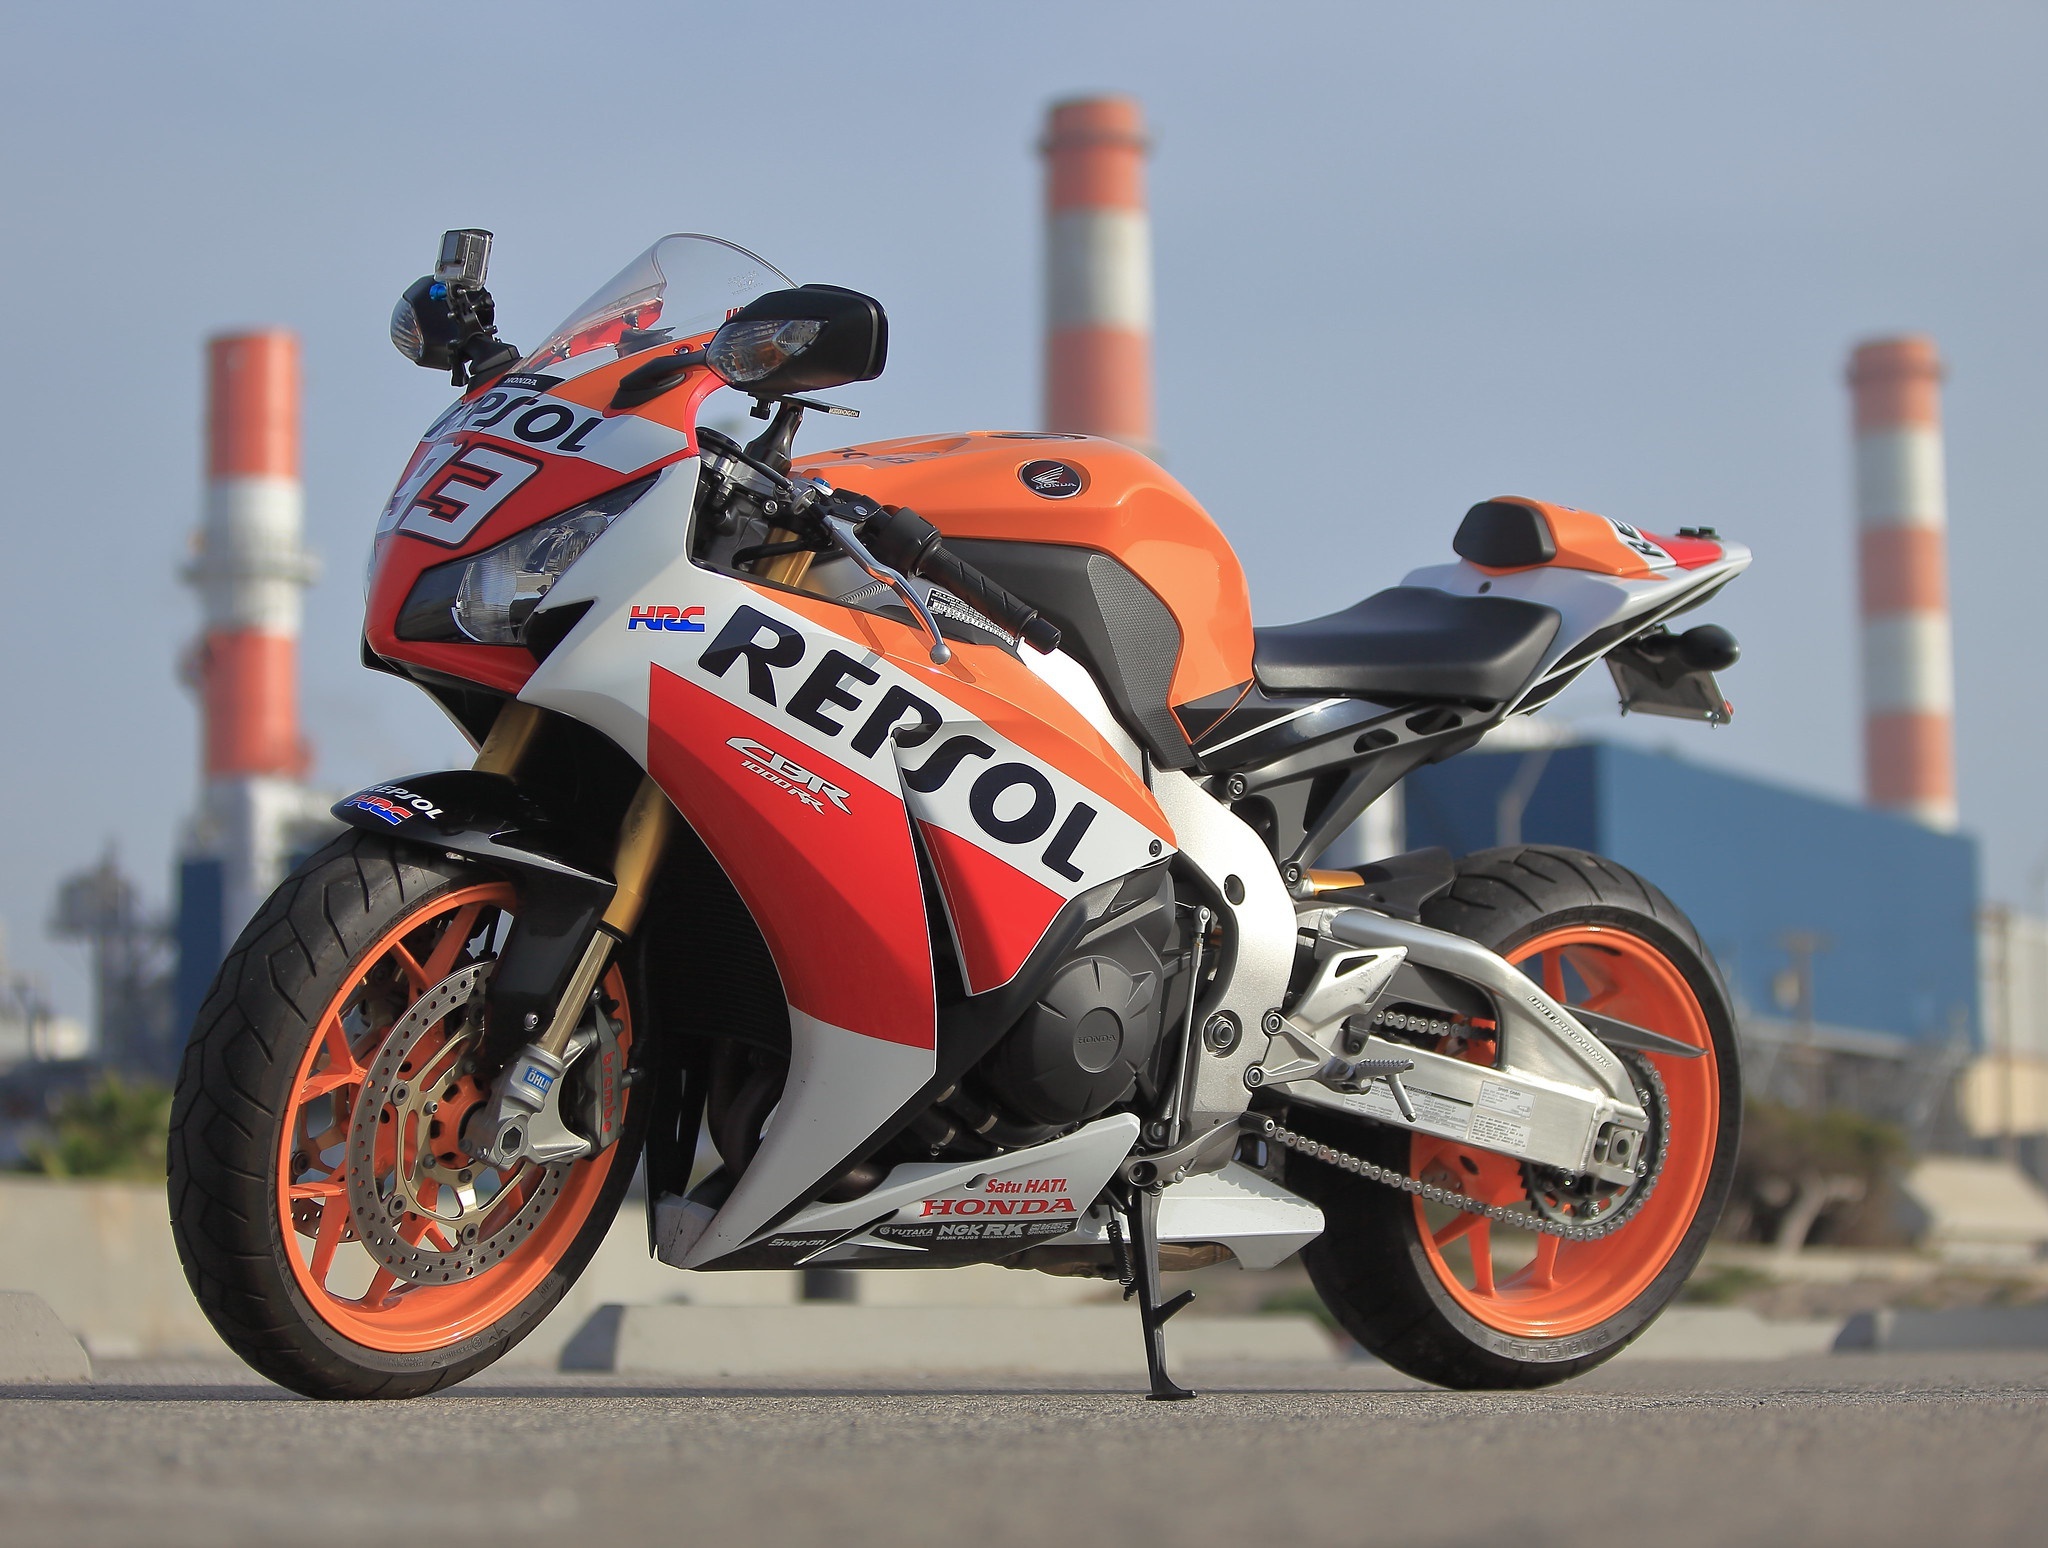 Honda CBR1000RR, HD wallpaper background, Powerful superbike, Precision engineering, 2050x1550 HD Desktop